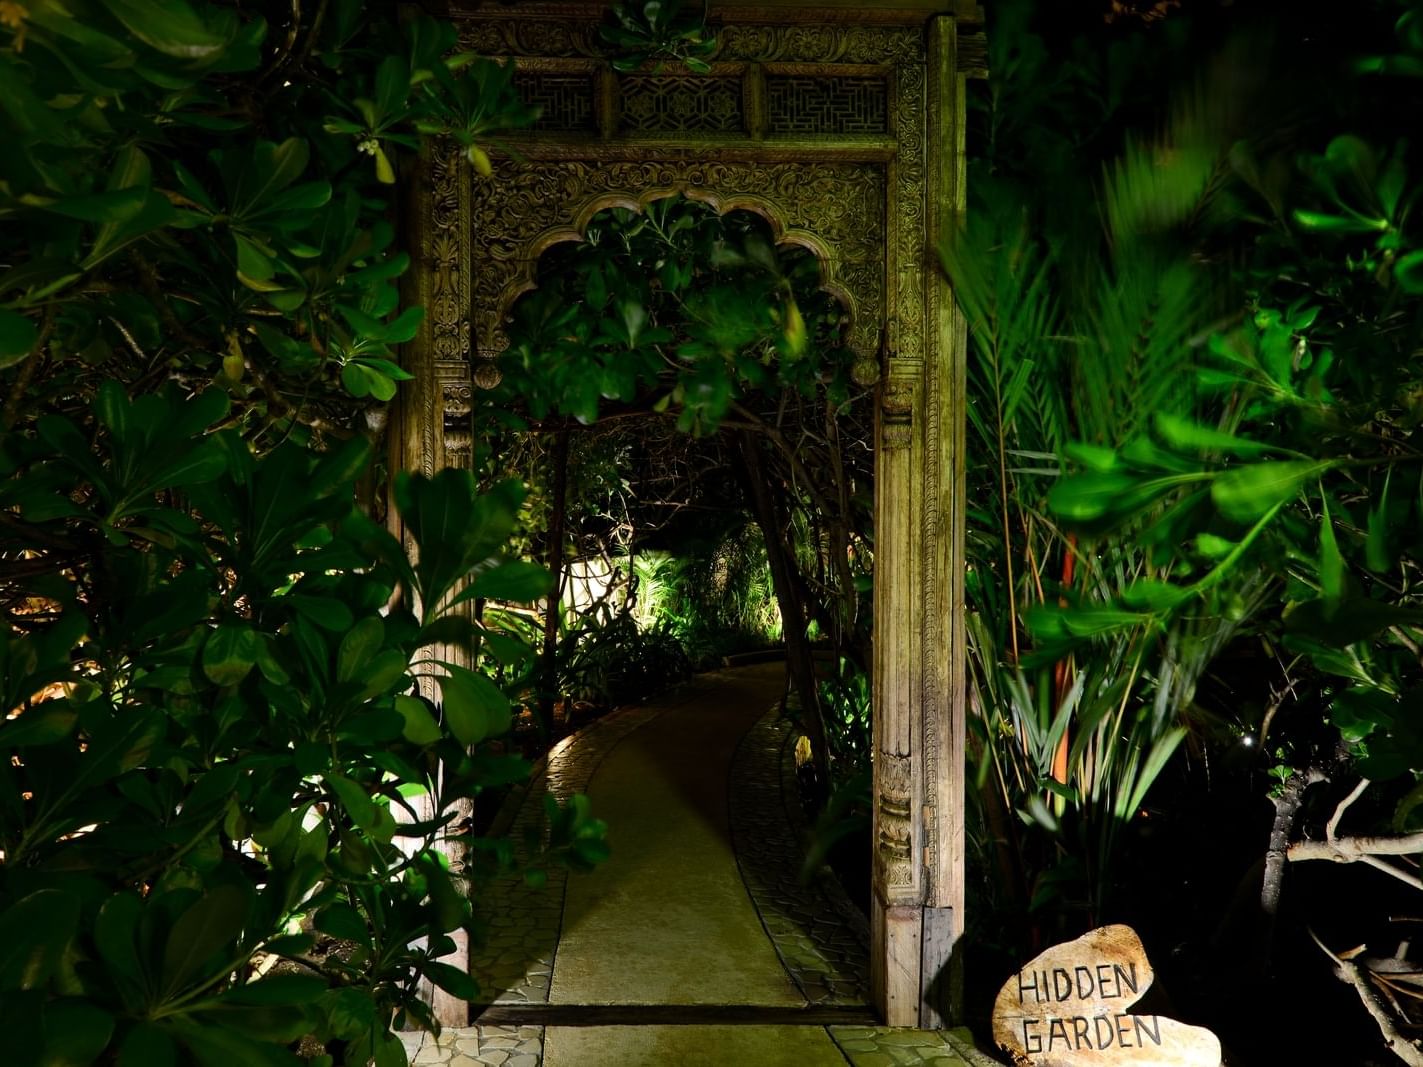 Hidden Garden entrance surrounded by trees, La Colección